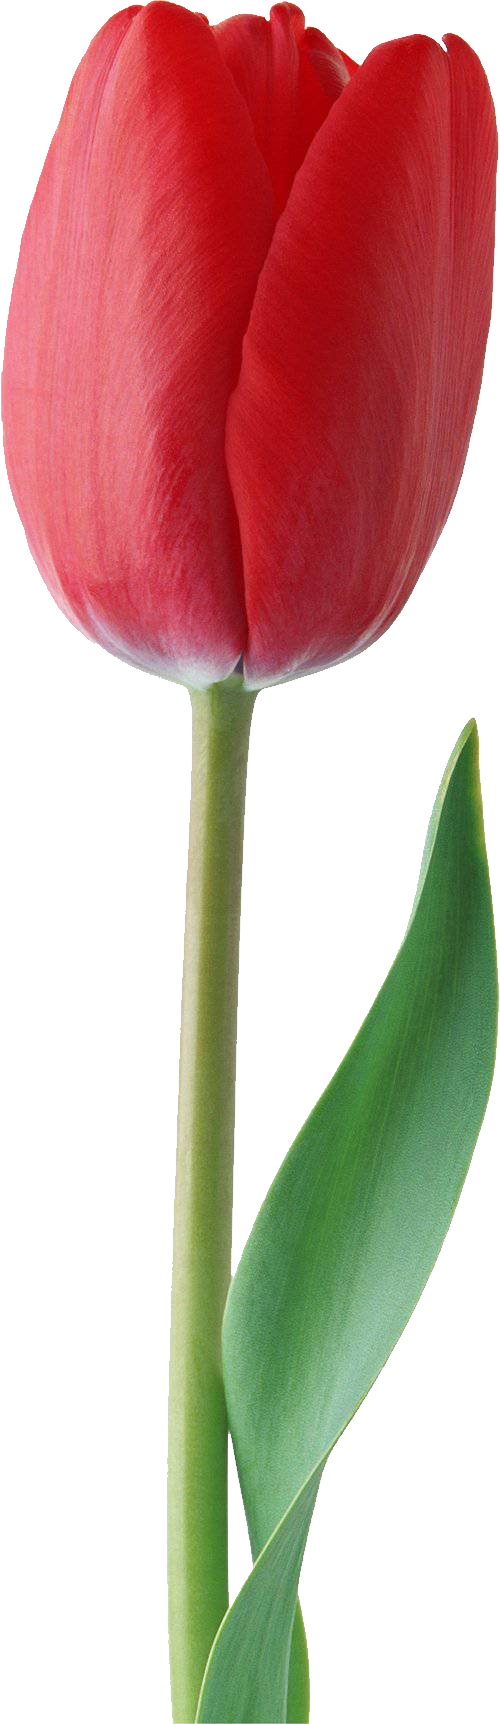 Tulip Png Transparent Tulip - Red Tulip Flower Png (500x1724)